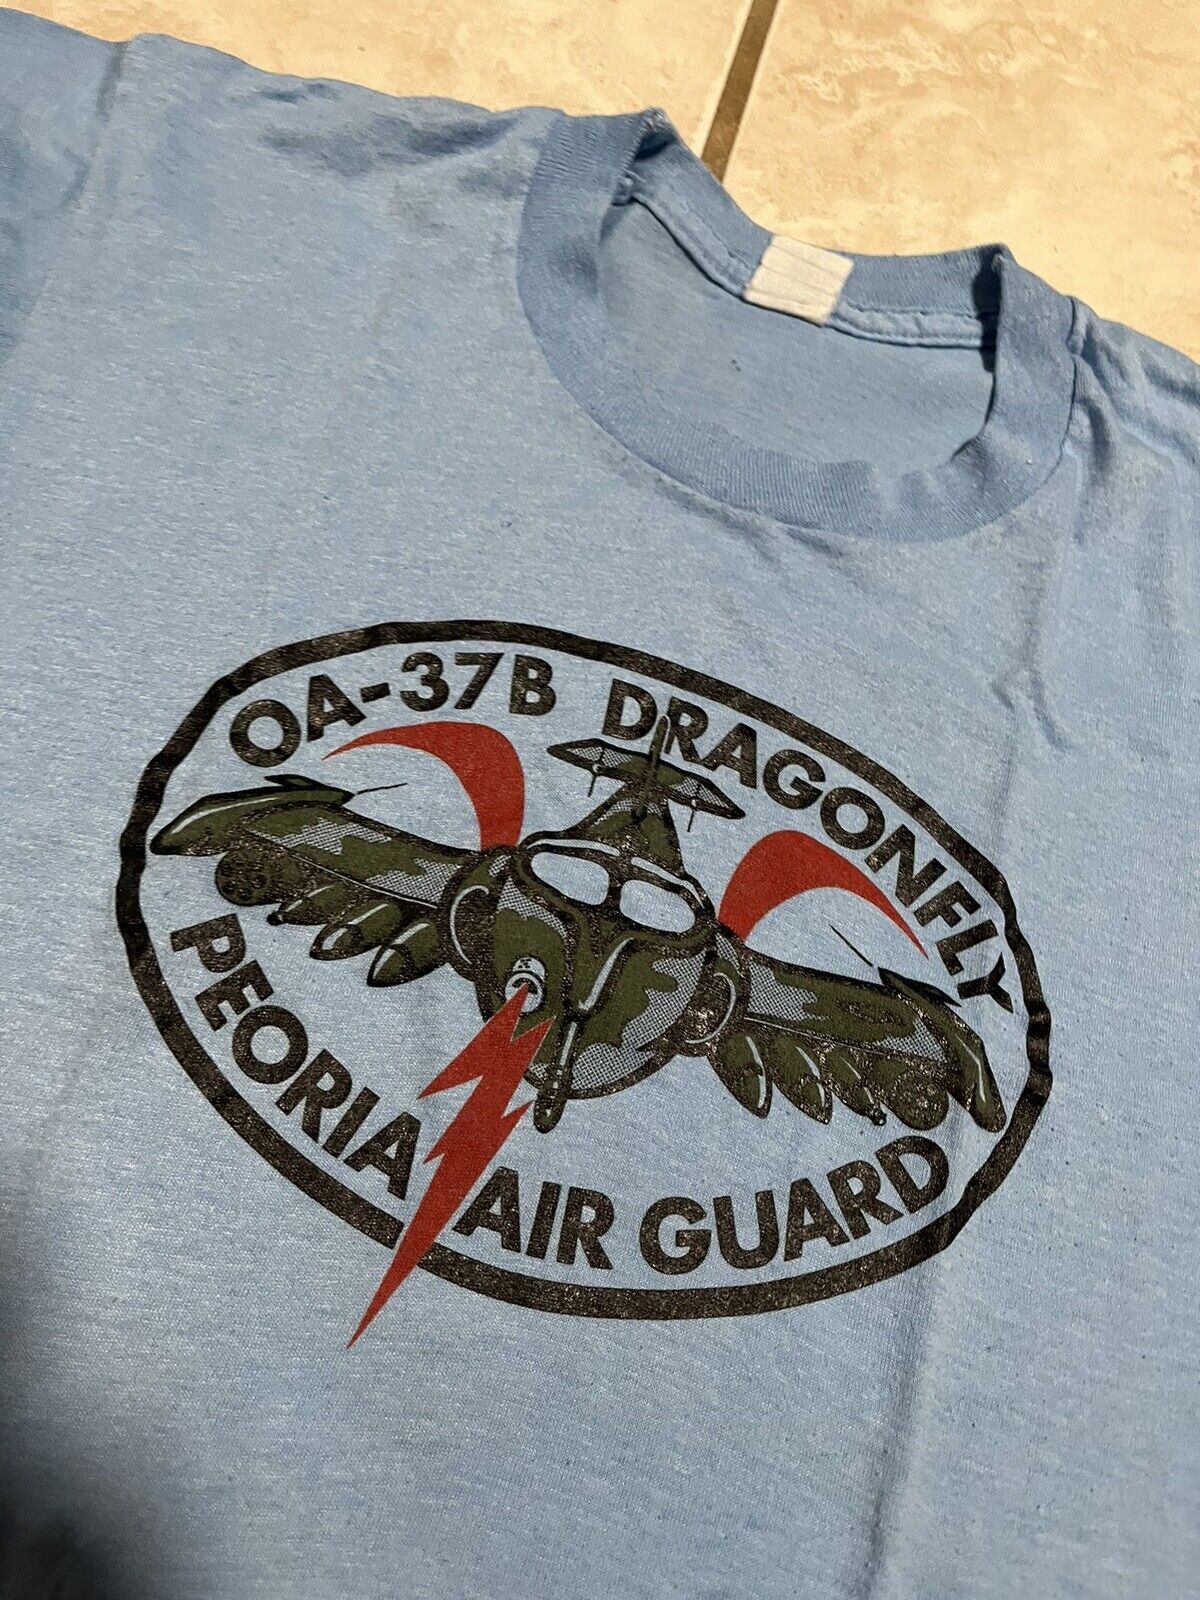 Vintage 1980s USAF Air Force Shirt OA-37B Dragonfly Rare Small